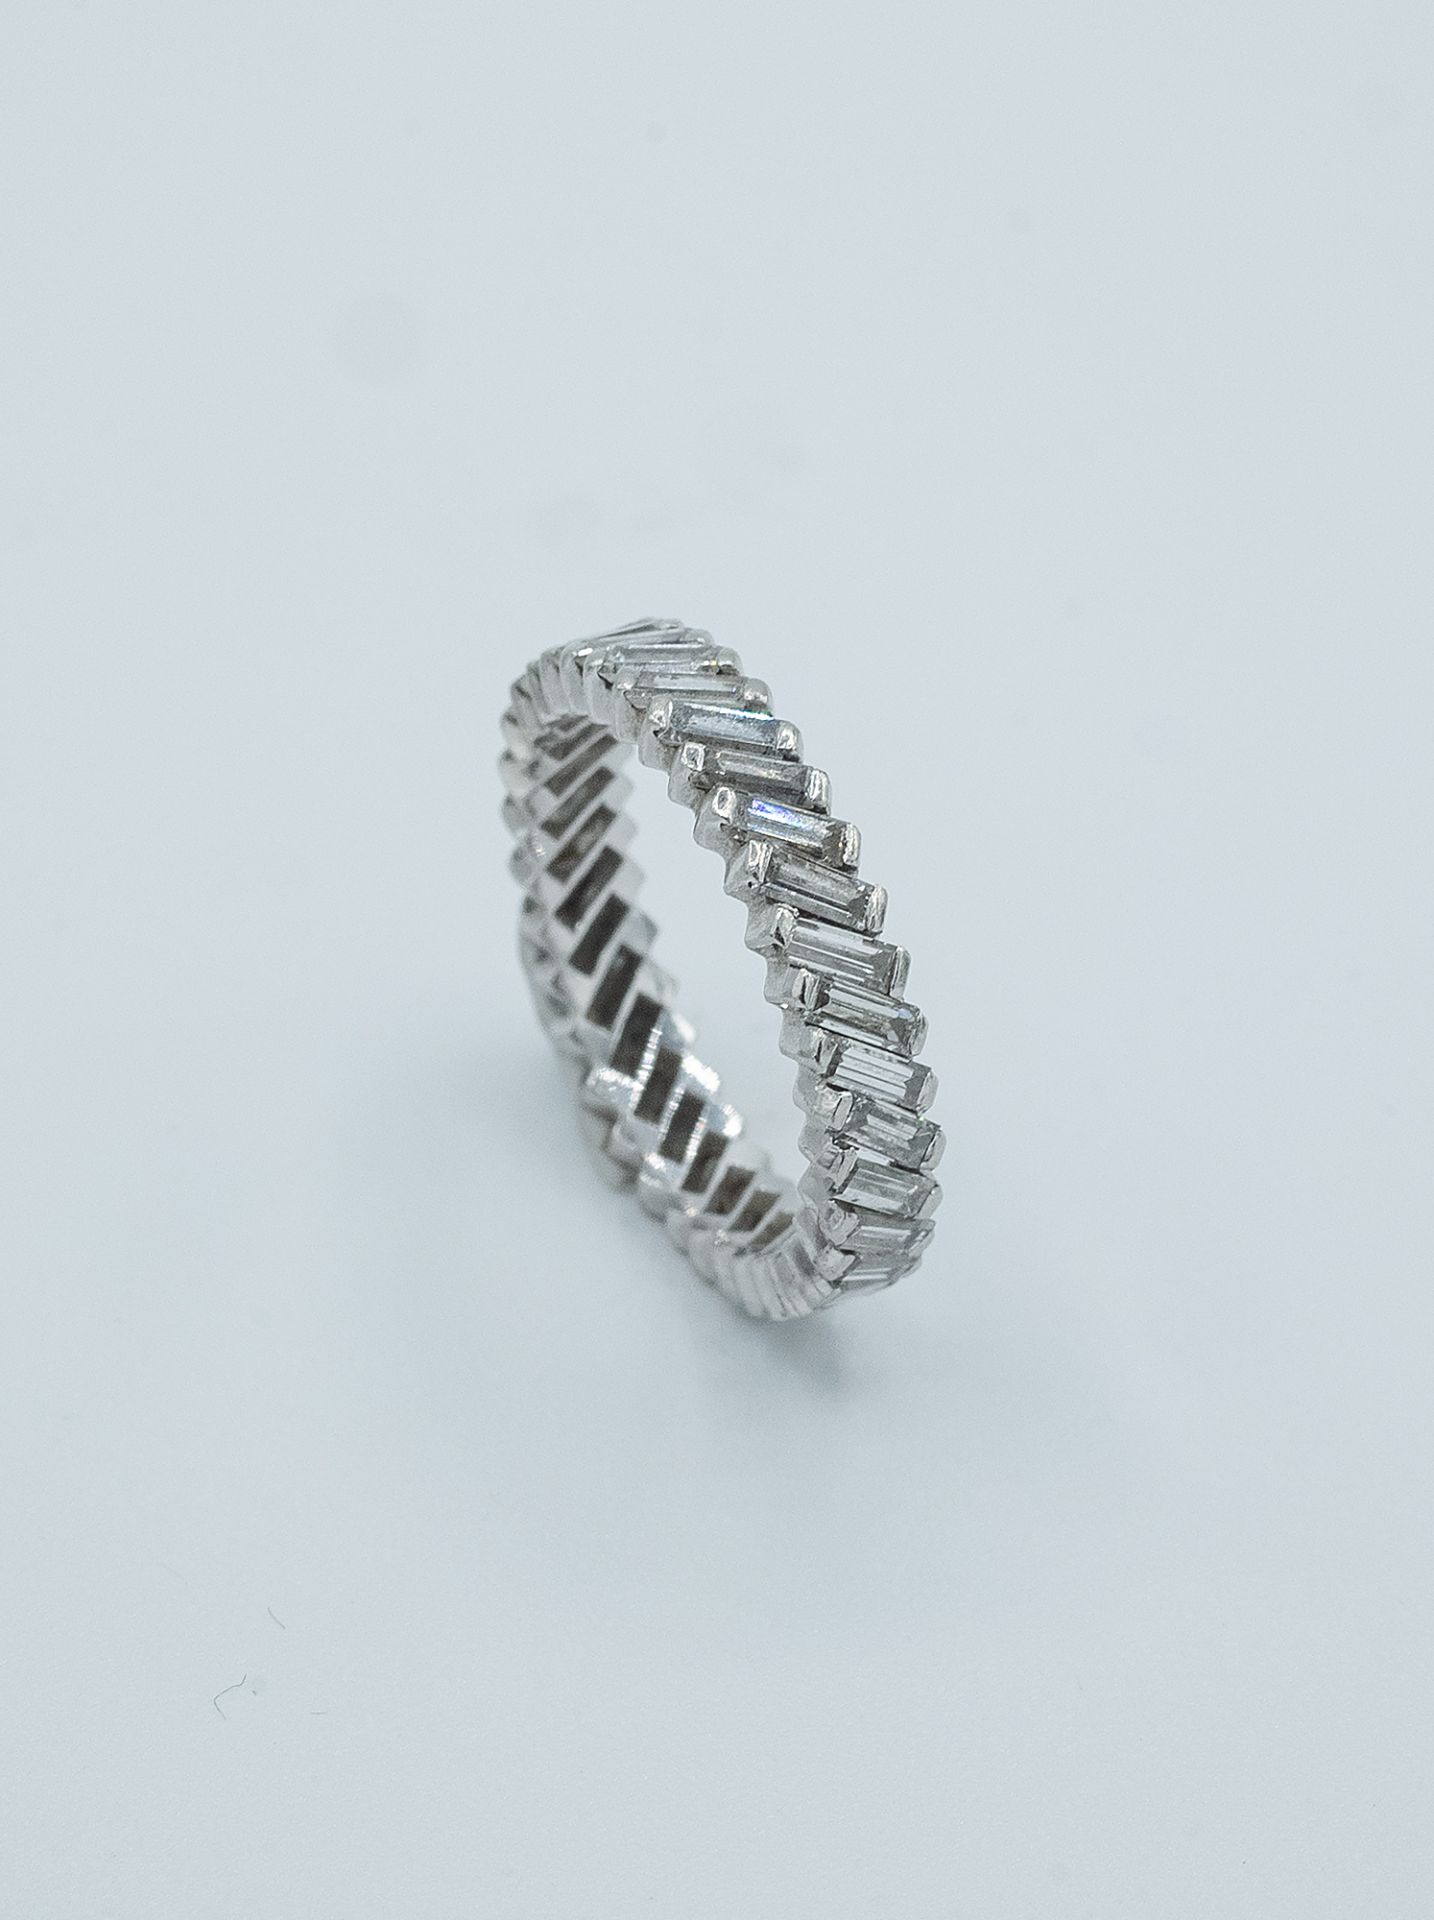 A baguette cut diamonds eternity ring - Image 2 of 3